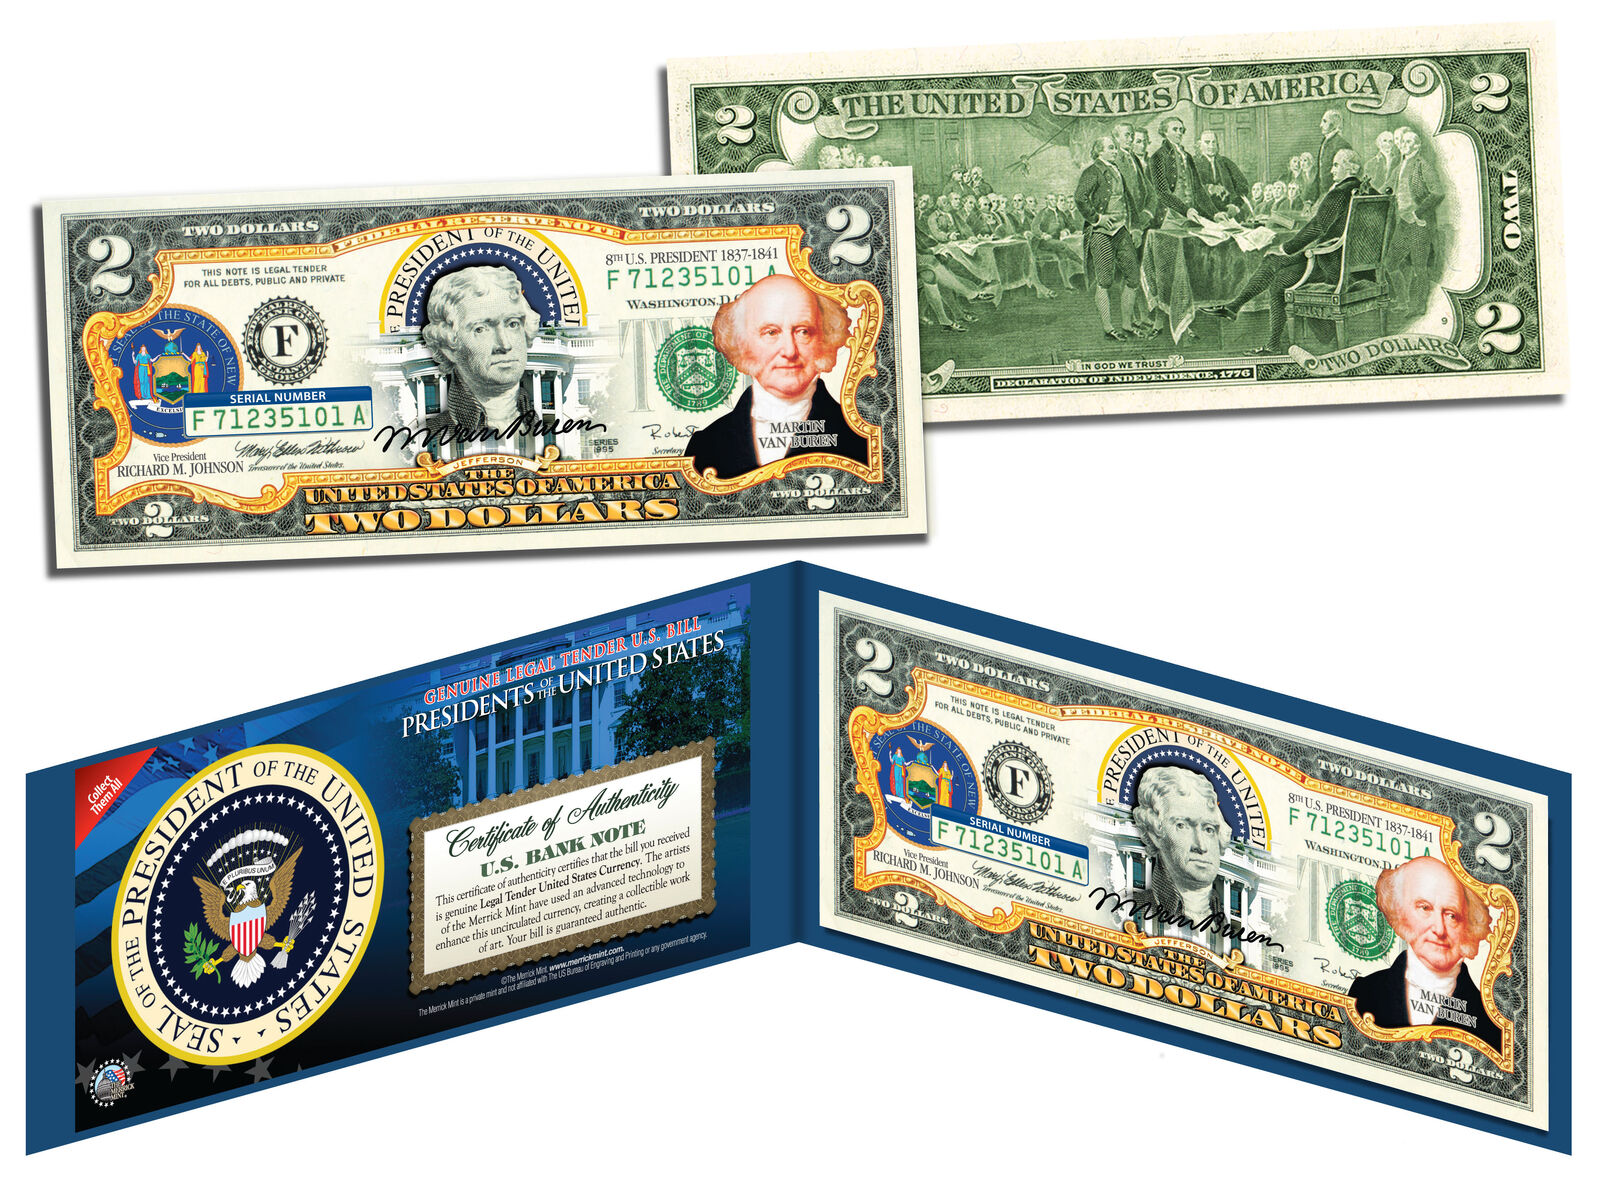 MARTIN VAN BUREN * 8th U.S. President * Colorized $2 Bill Genuine Legal Tender